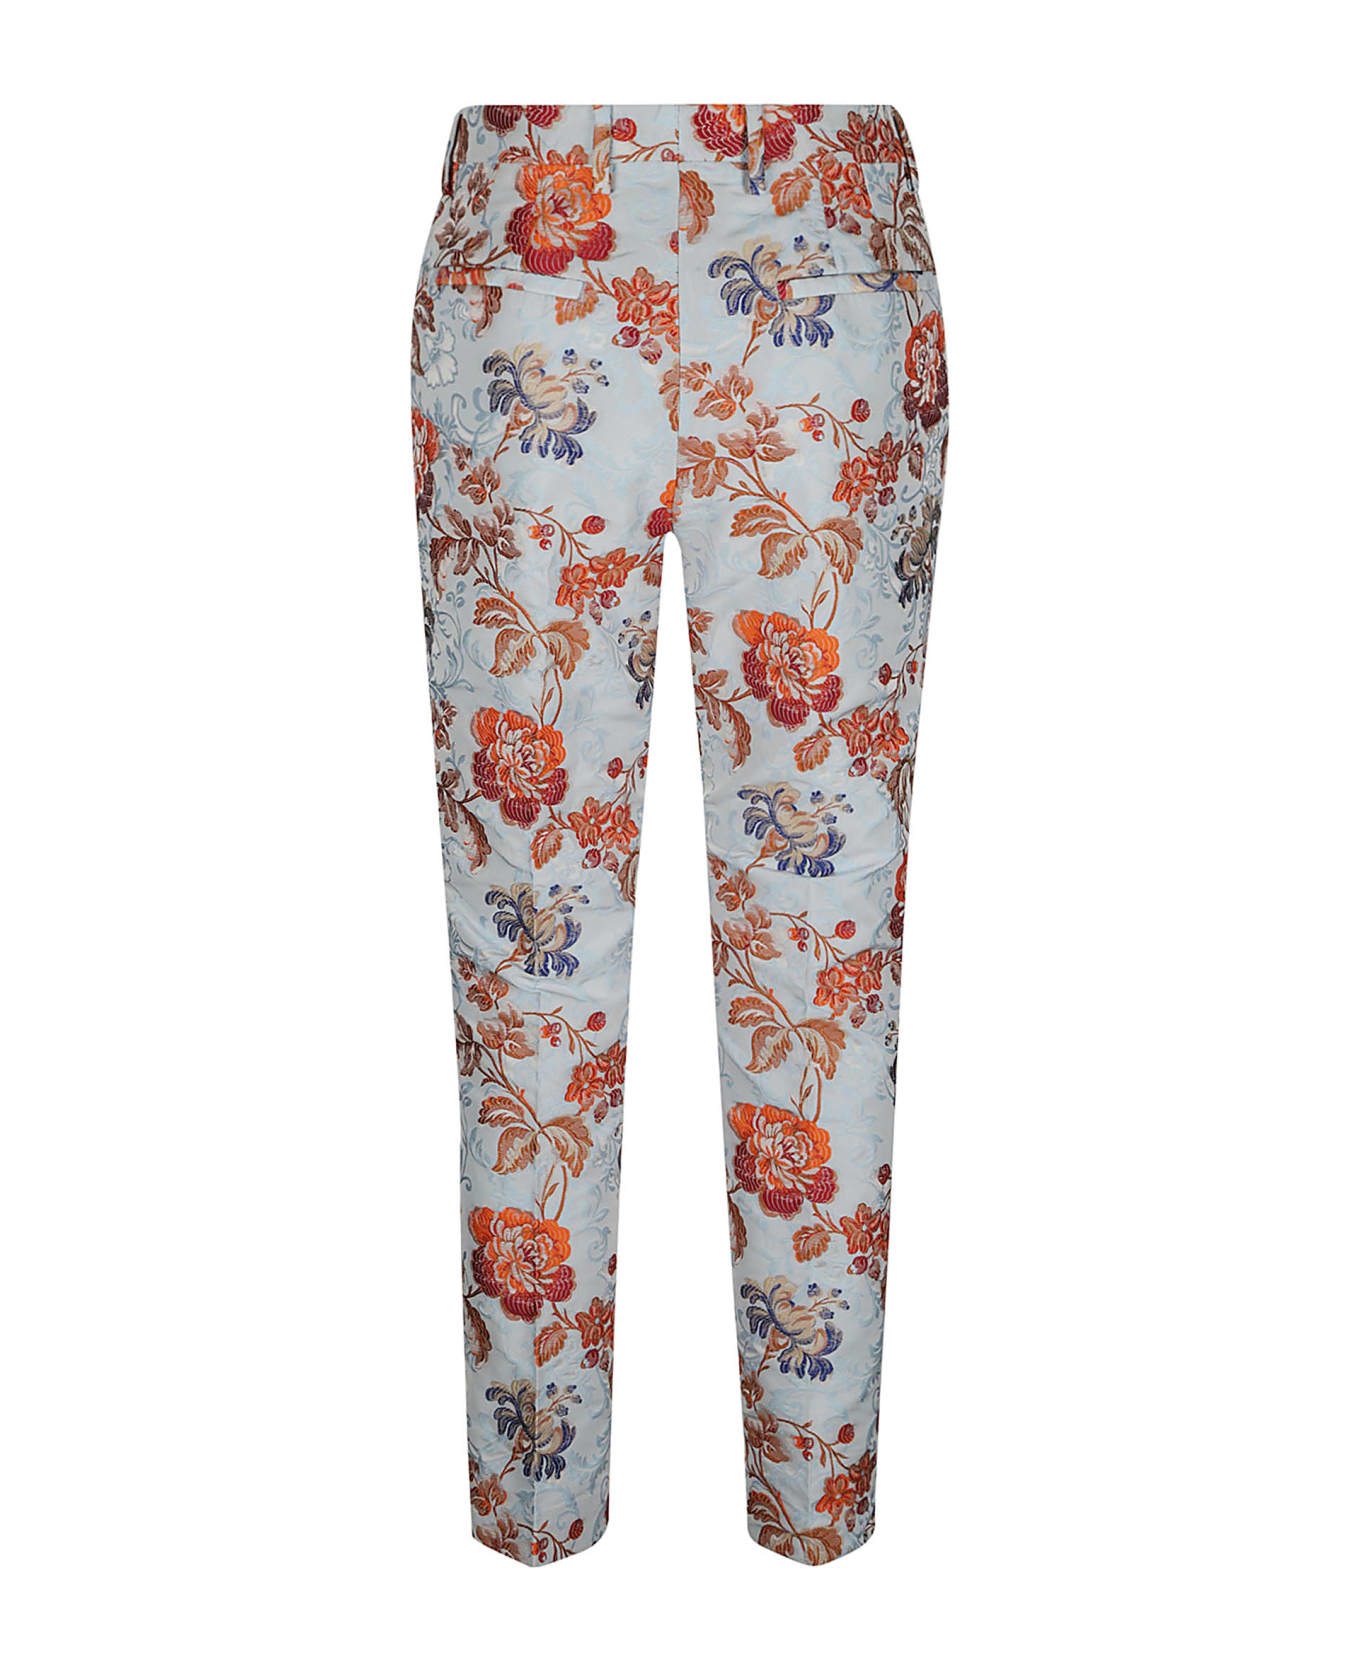 Etro Floral Print Trousers - Azure/Orange ボトムス